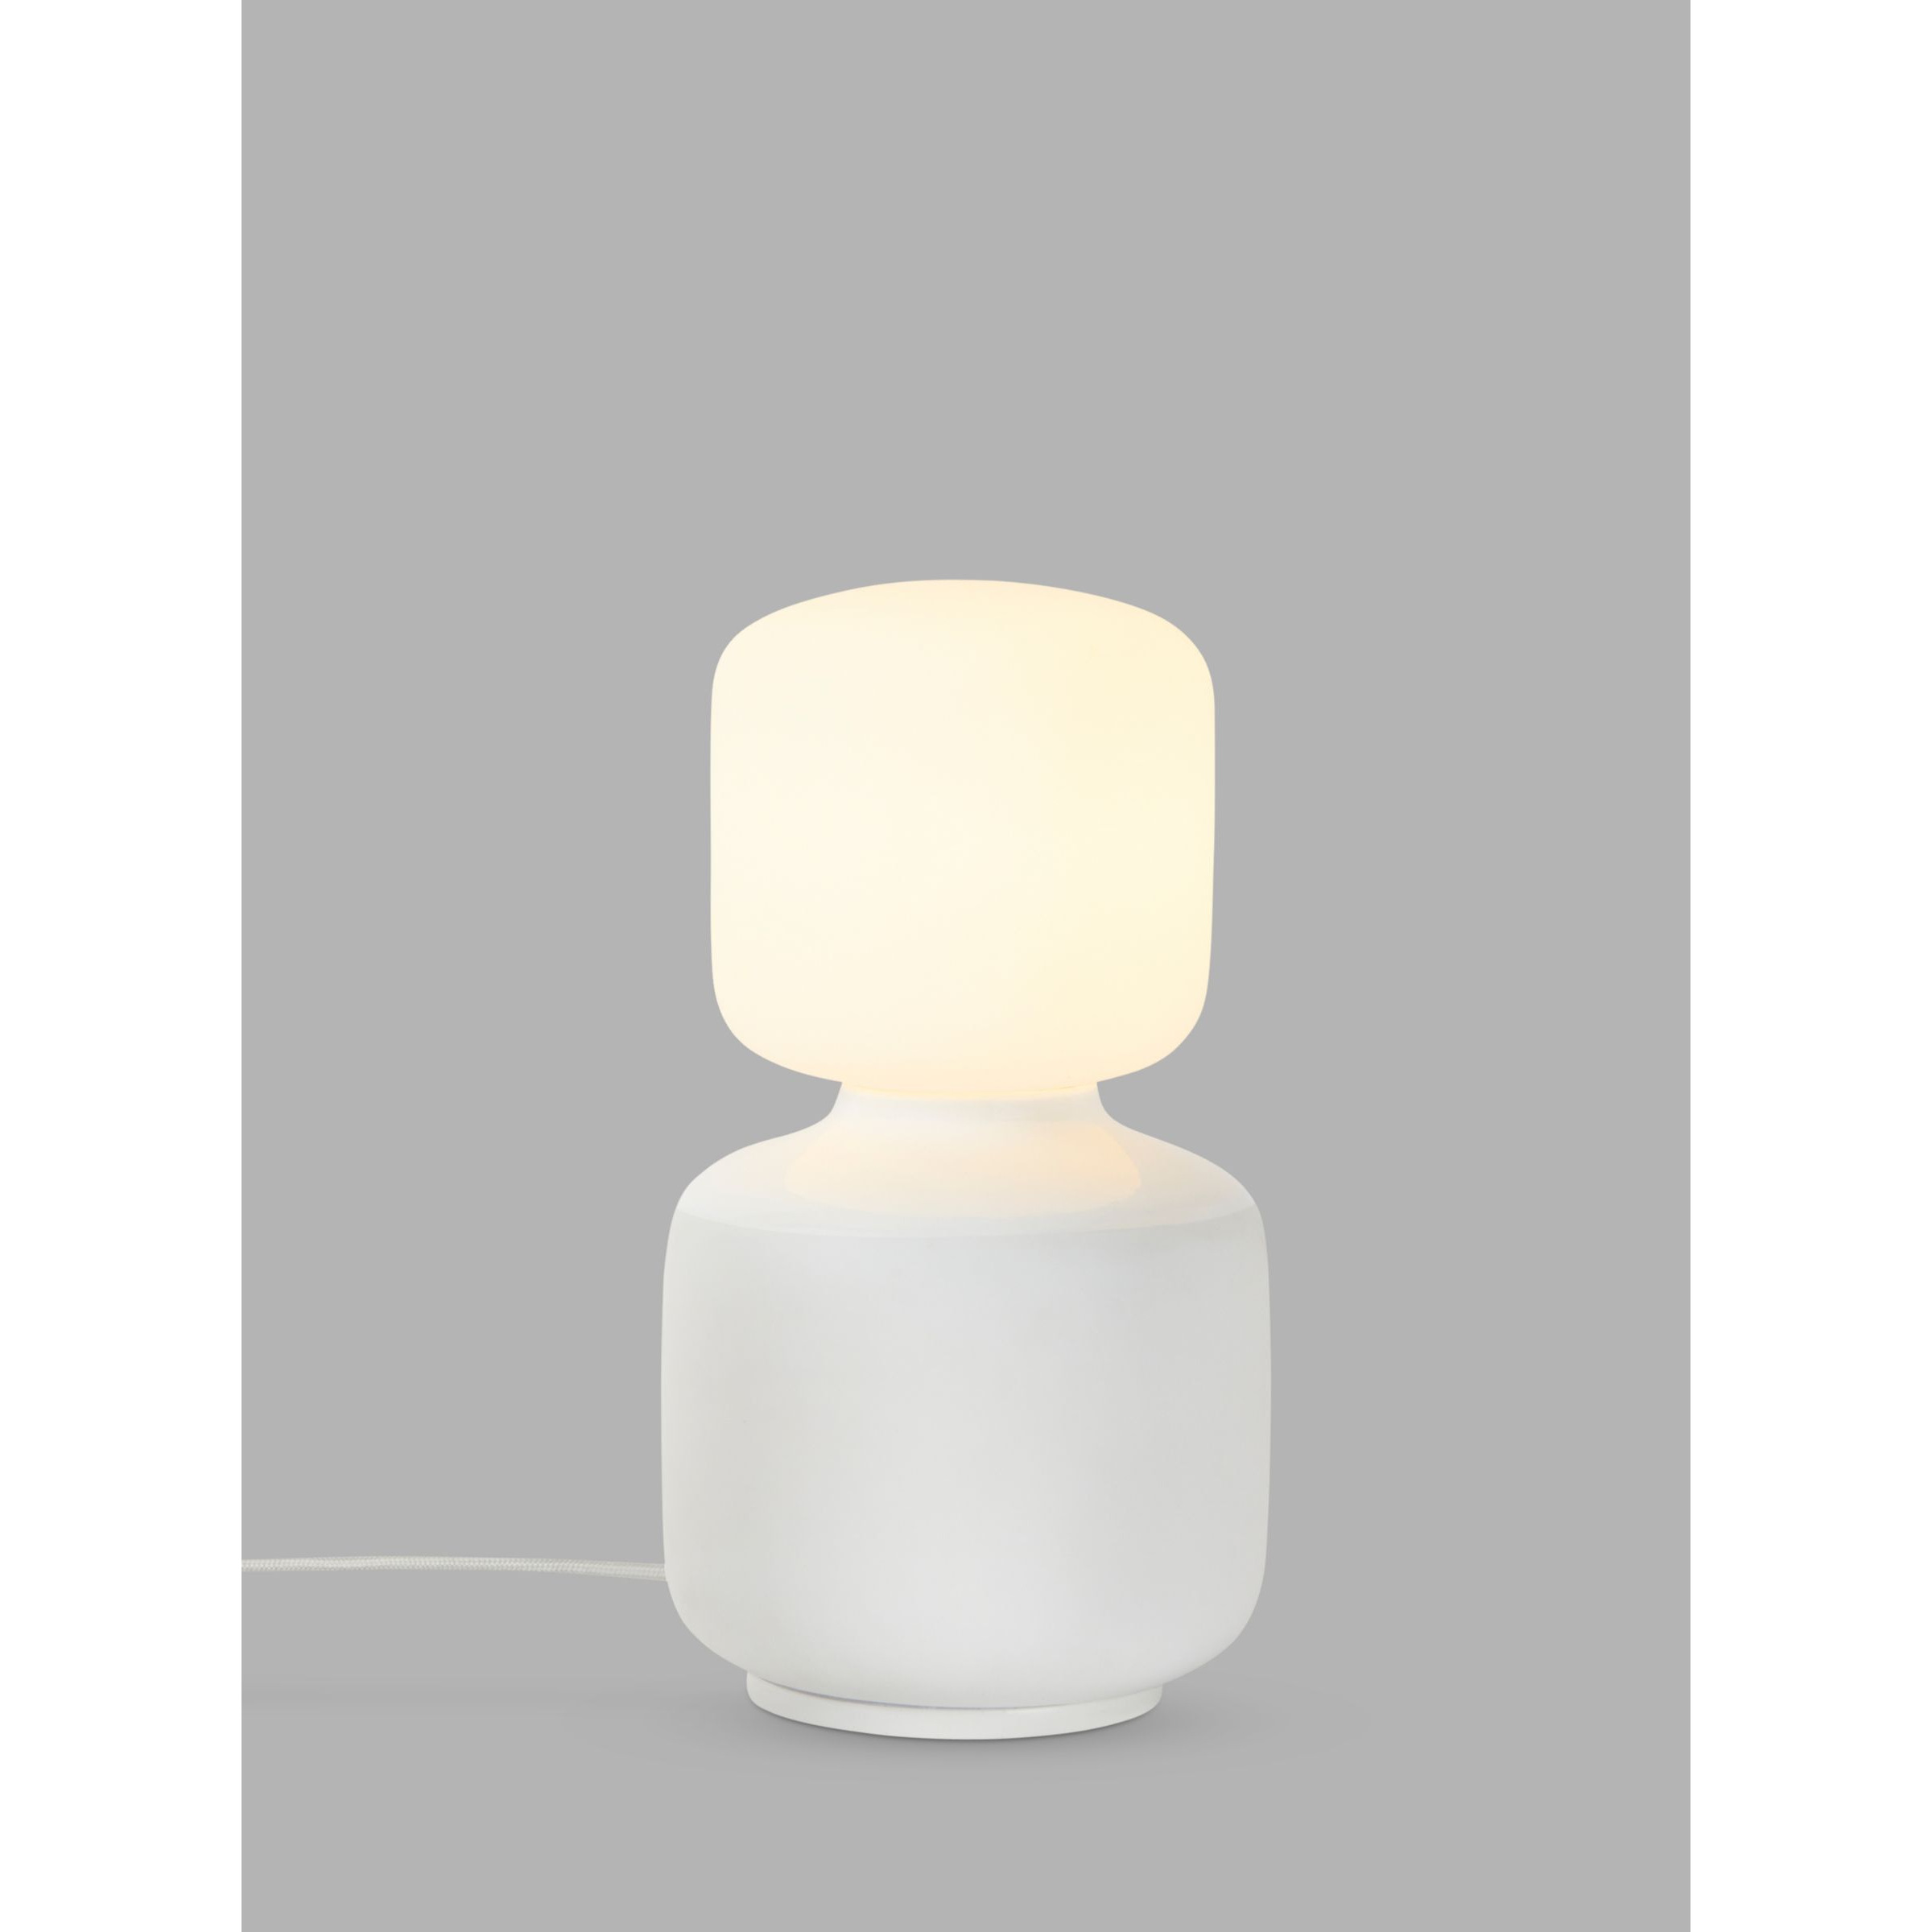 Tala Reflection Table Lamp with 6W Oblo LED Bulb, White - image 1